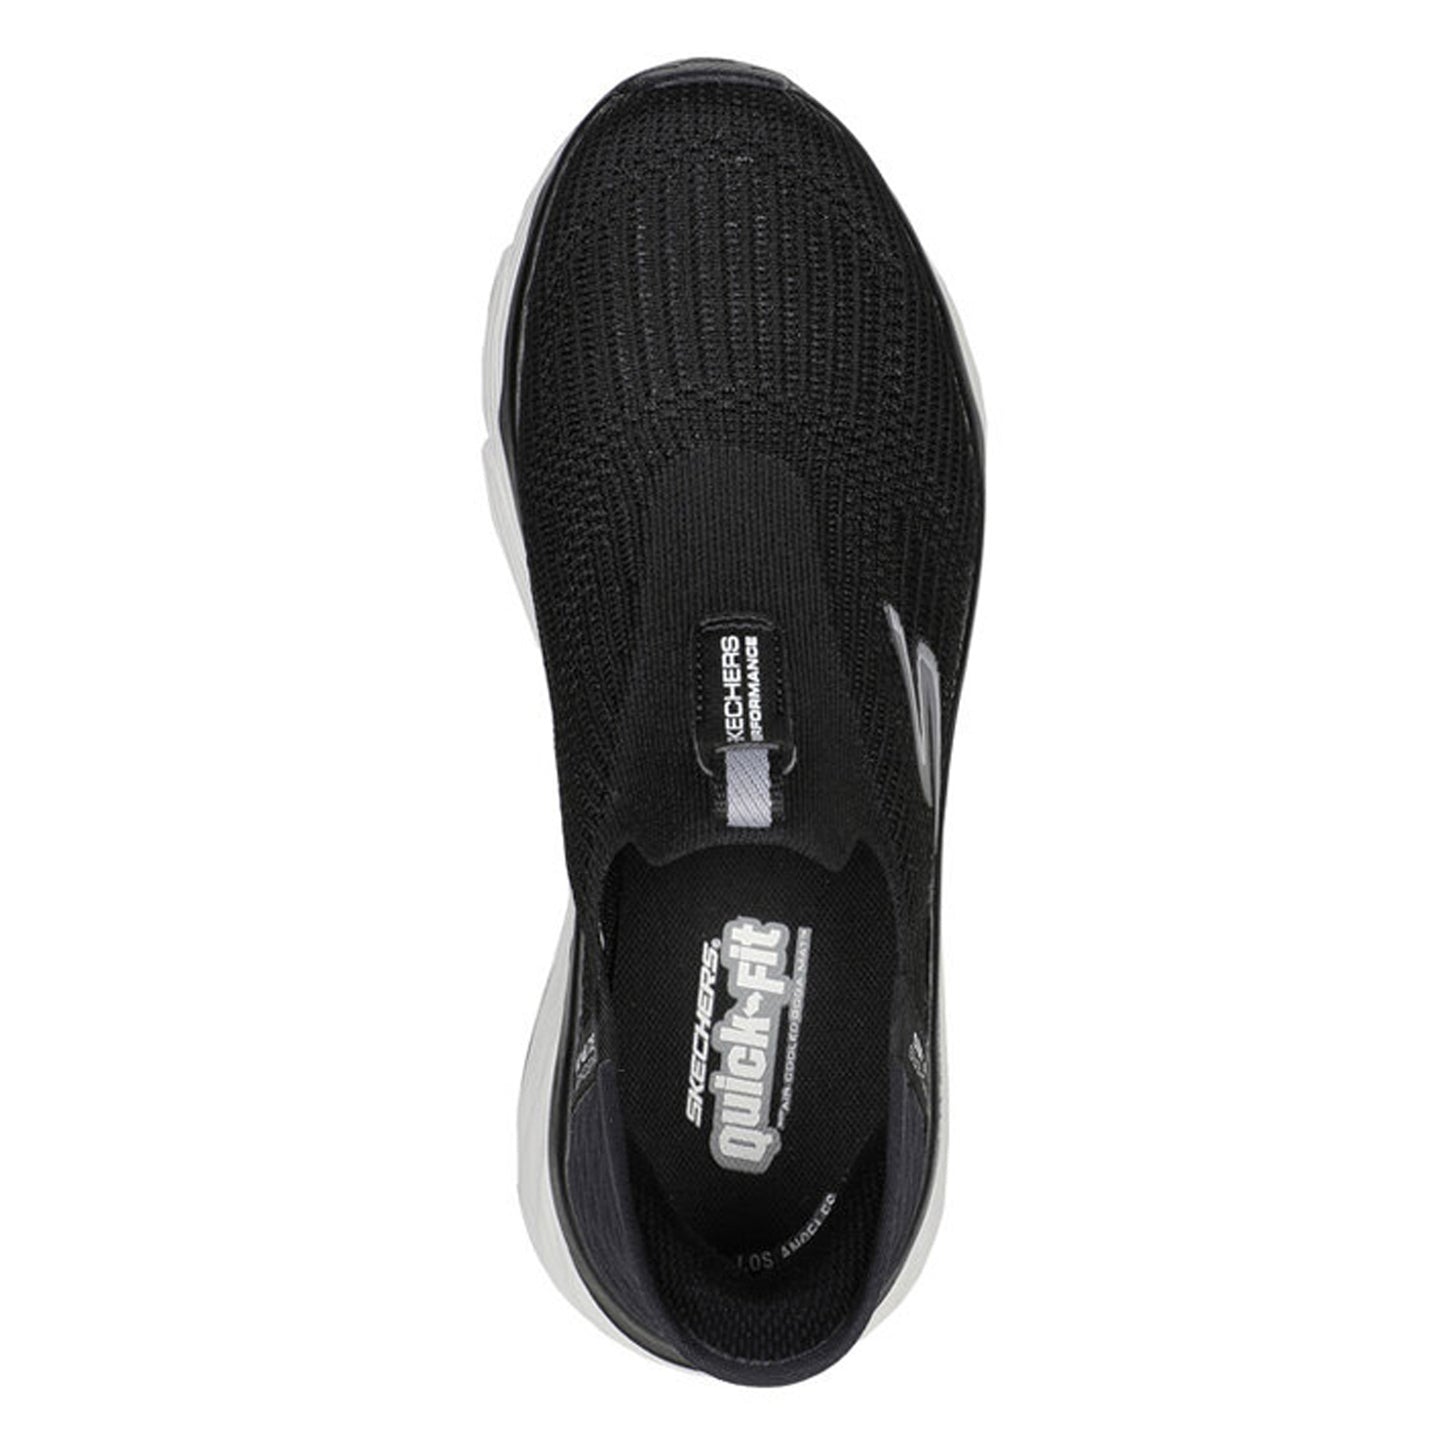 Peltz Shoes  Women's Skechers Slip-ins: Max Cushioning - Smooth Sneaker BLACK / WHITE 128571-BKW